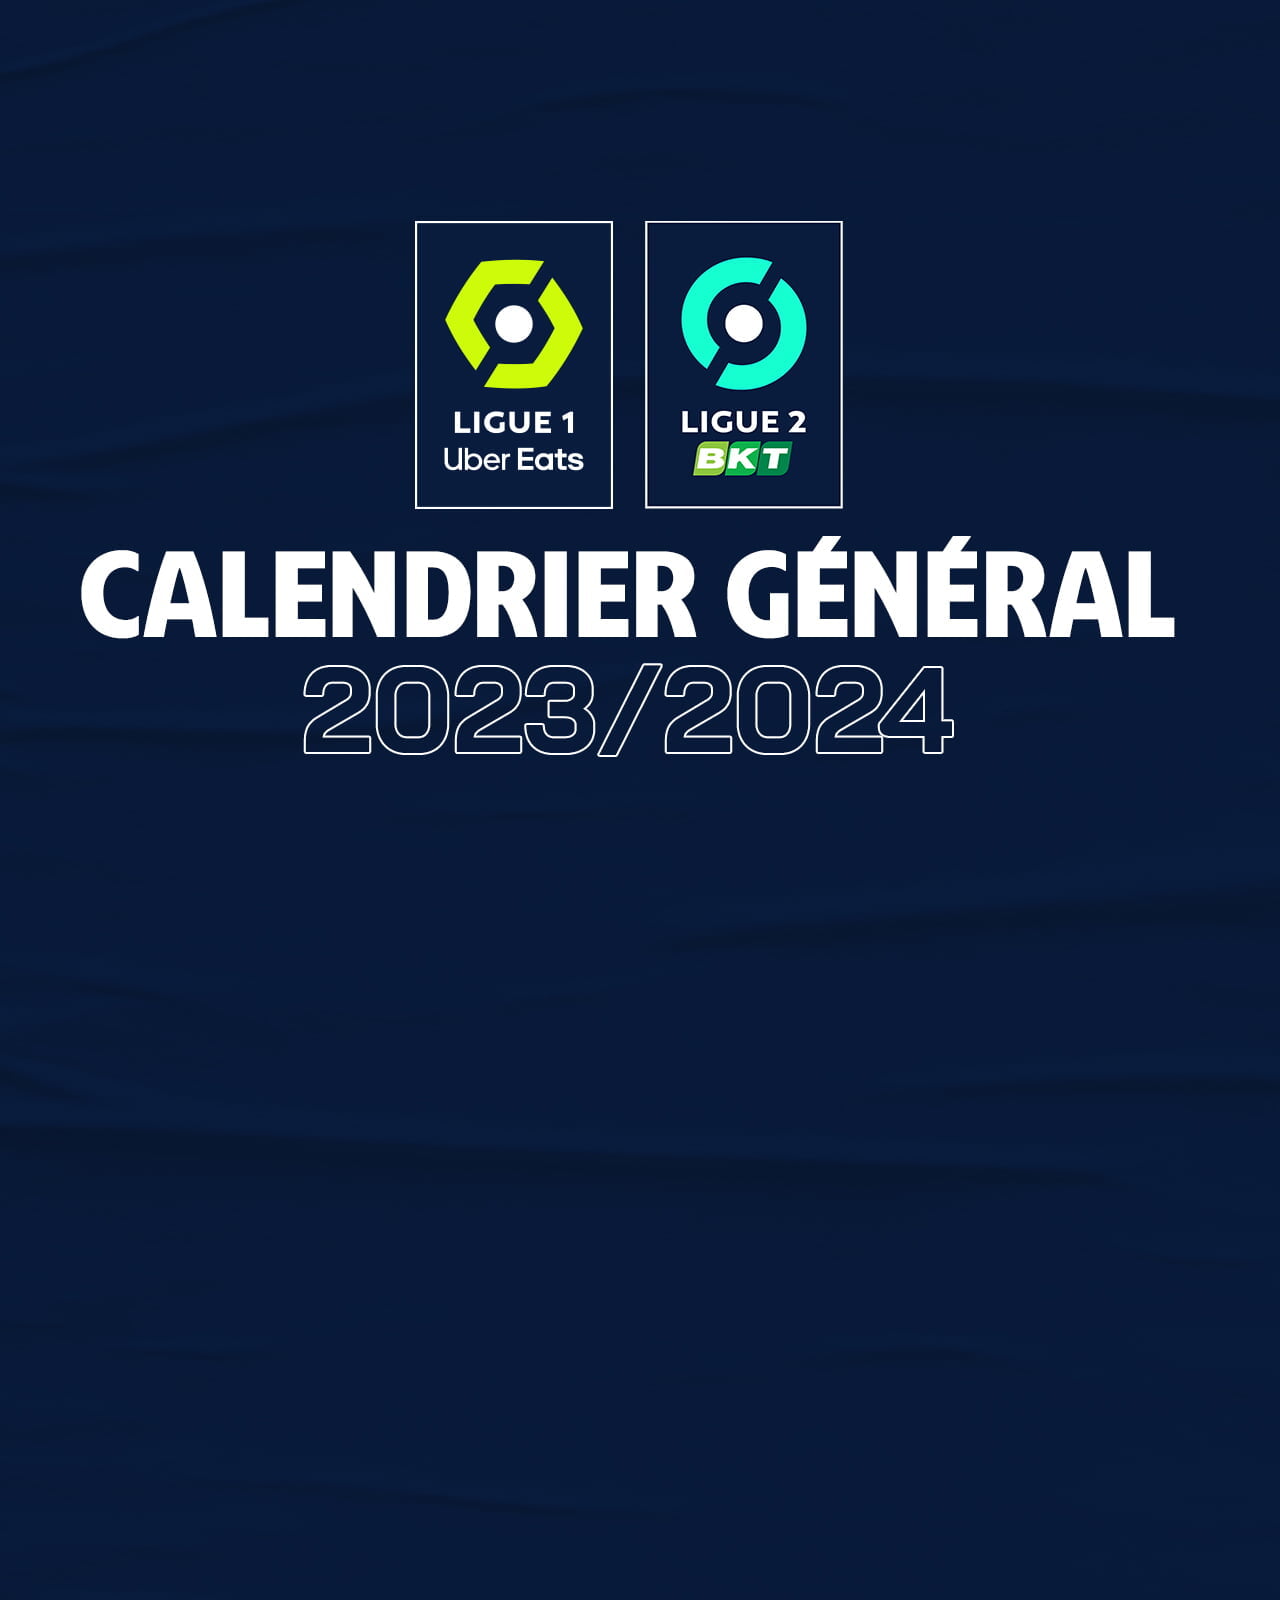 Fussball Brasil prevê a Bundesliga 2023/24